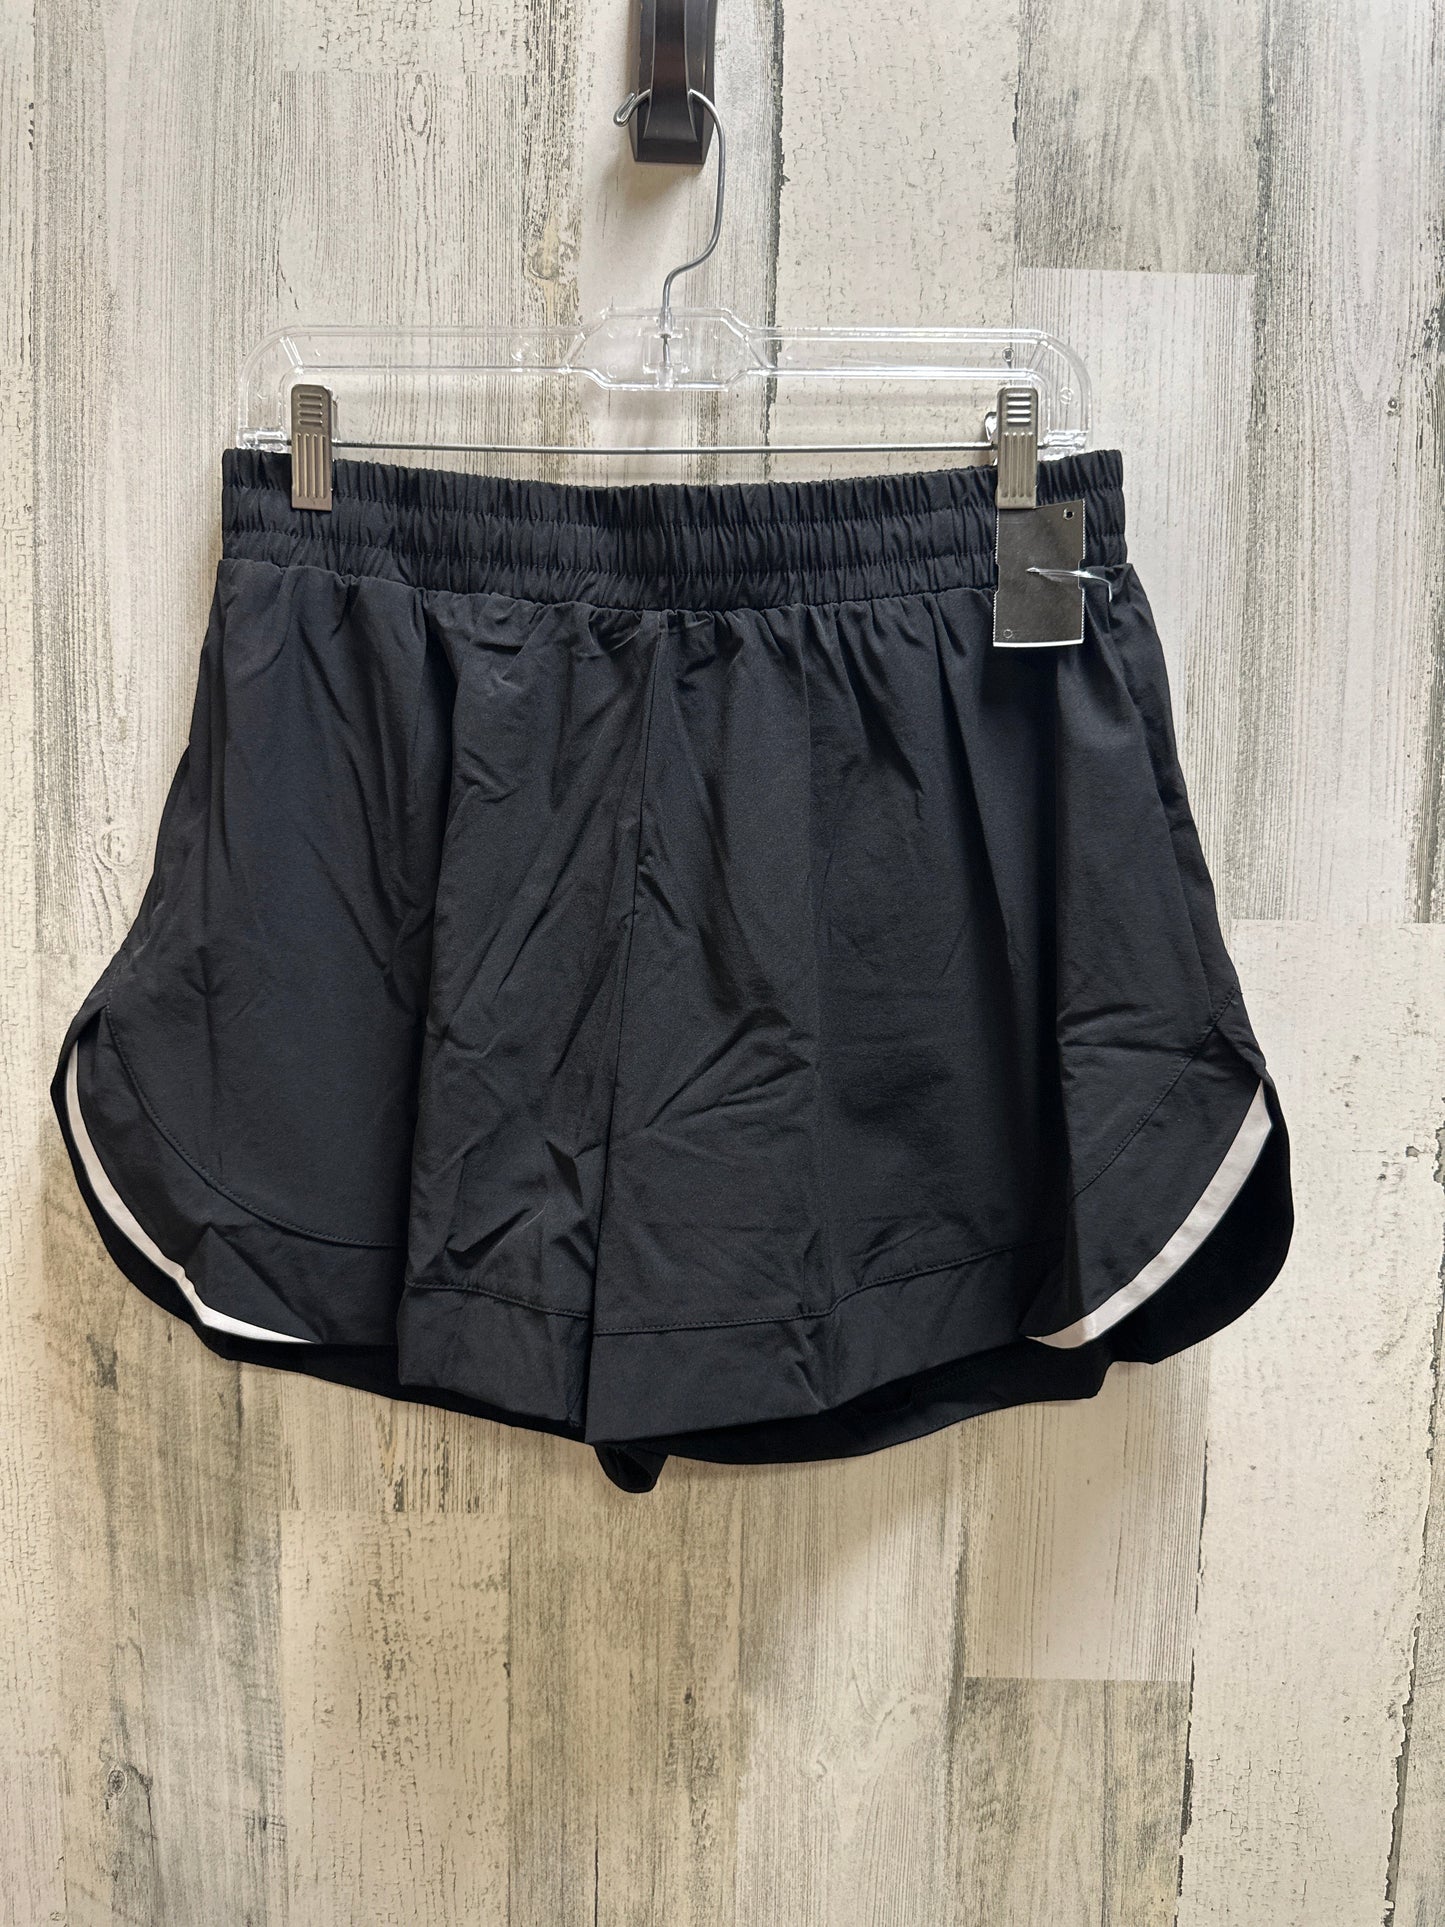 Black Athletic Shorts Clothes Mentor, Size Xl